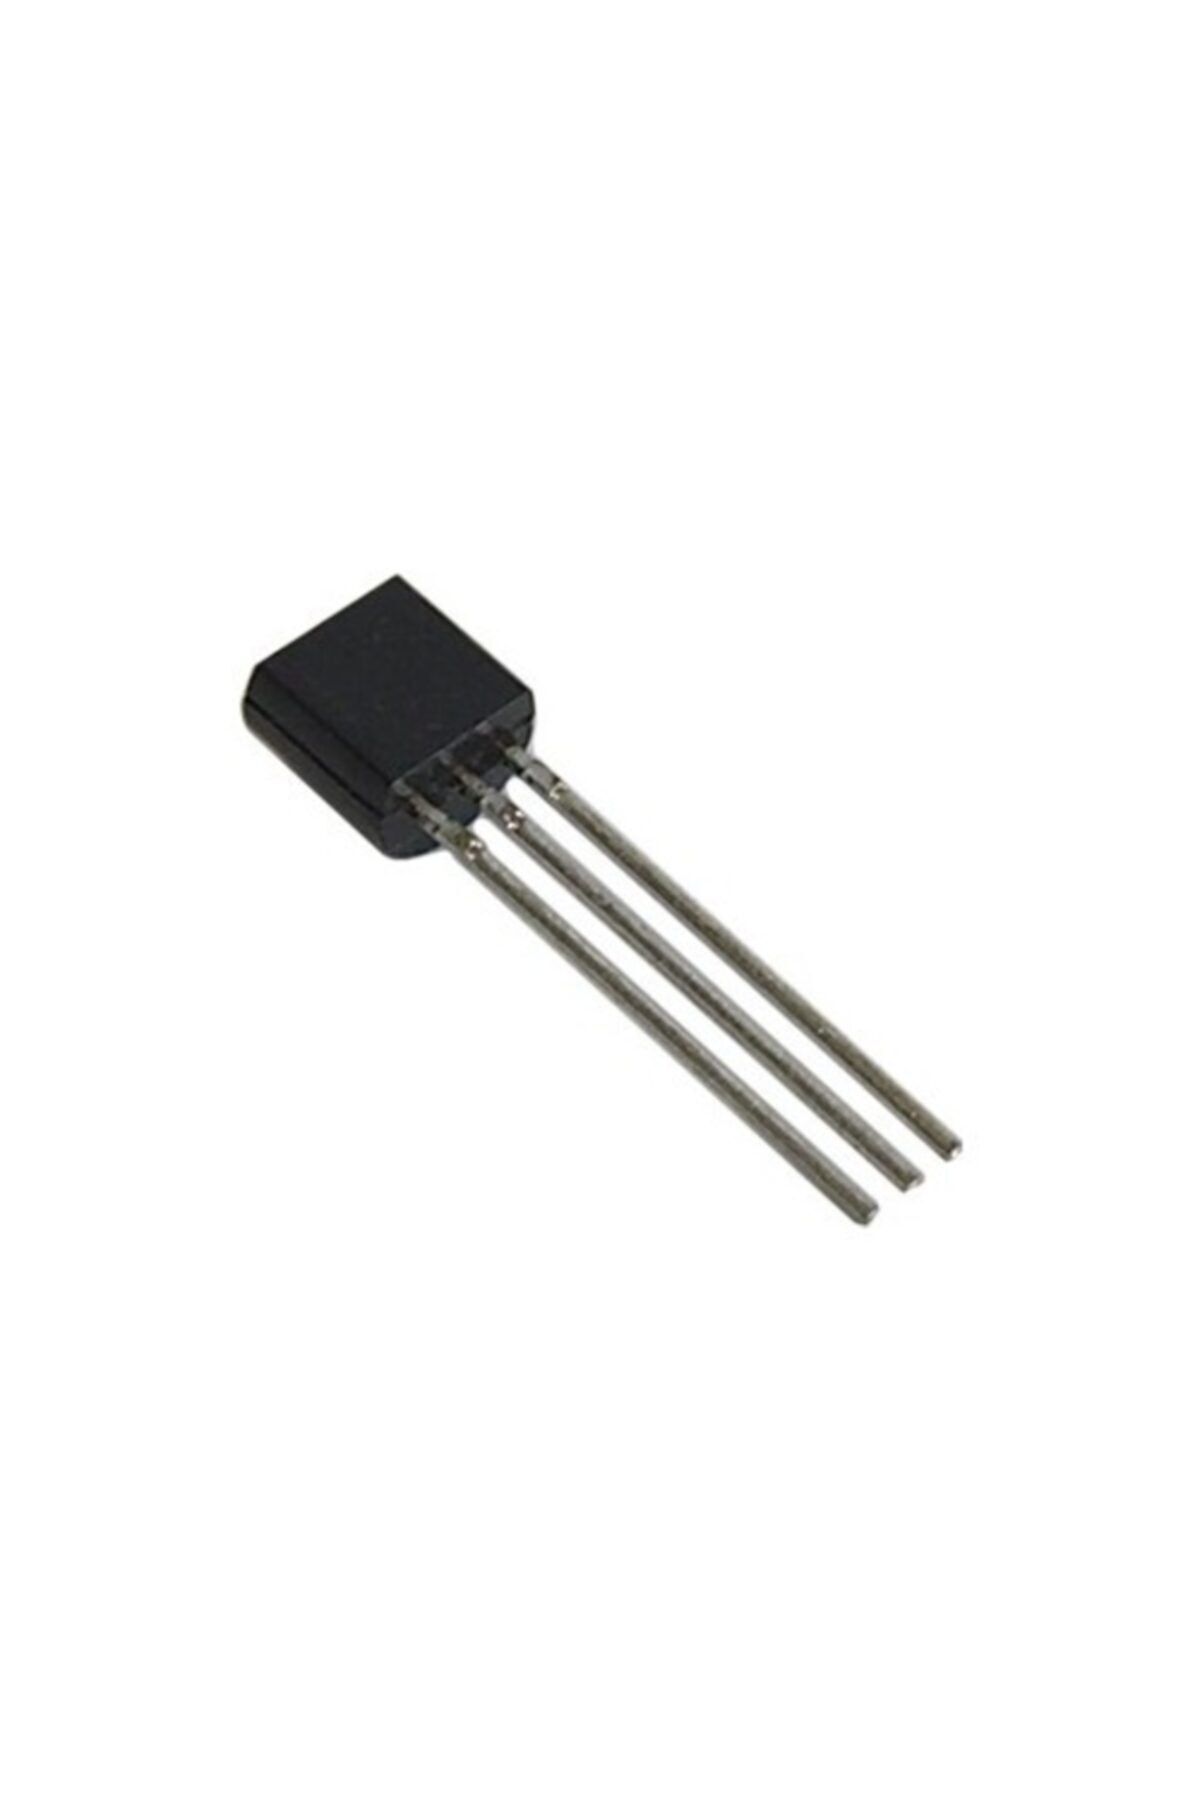 Diyotlab 2n2222 Transistor 10'lu